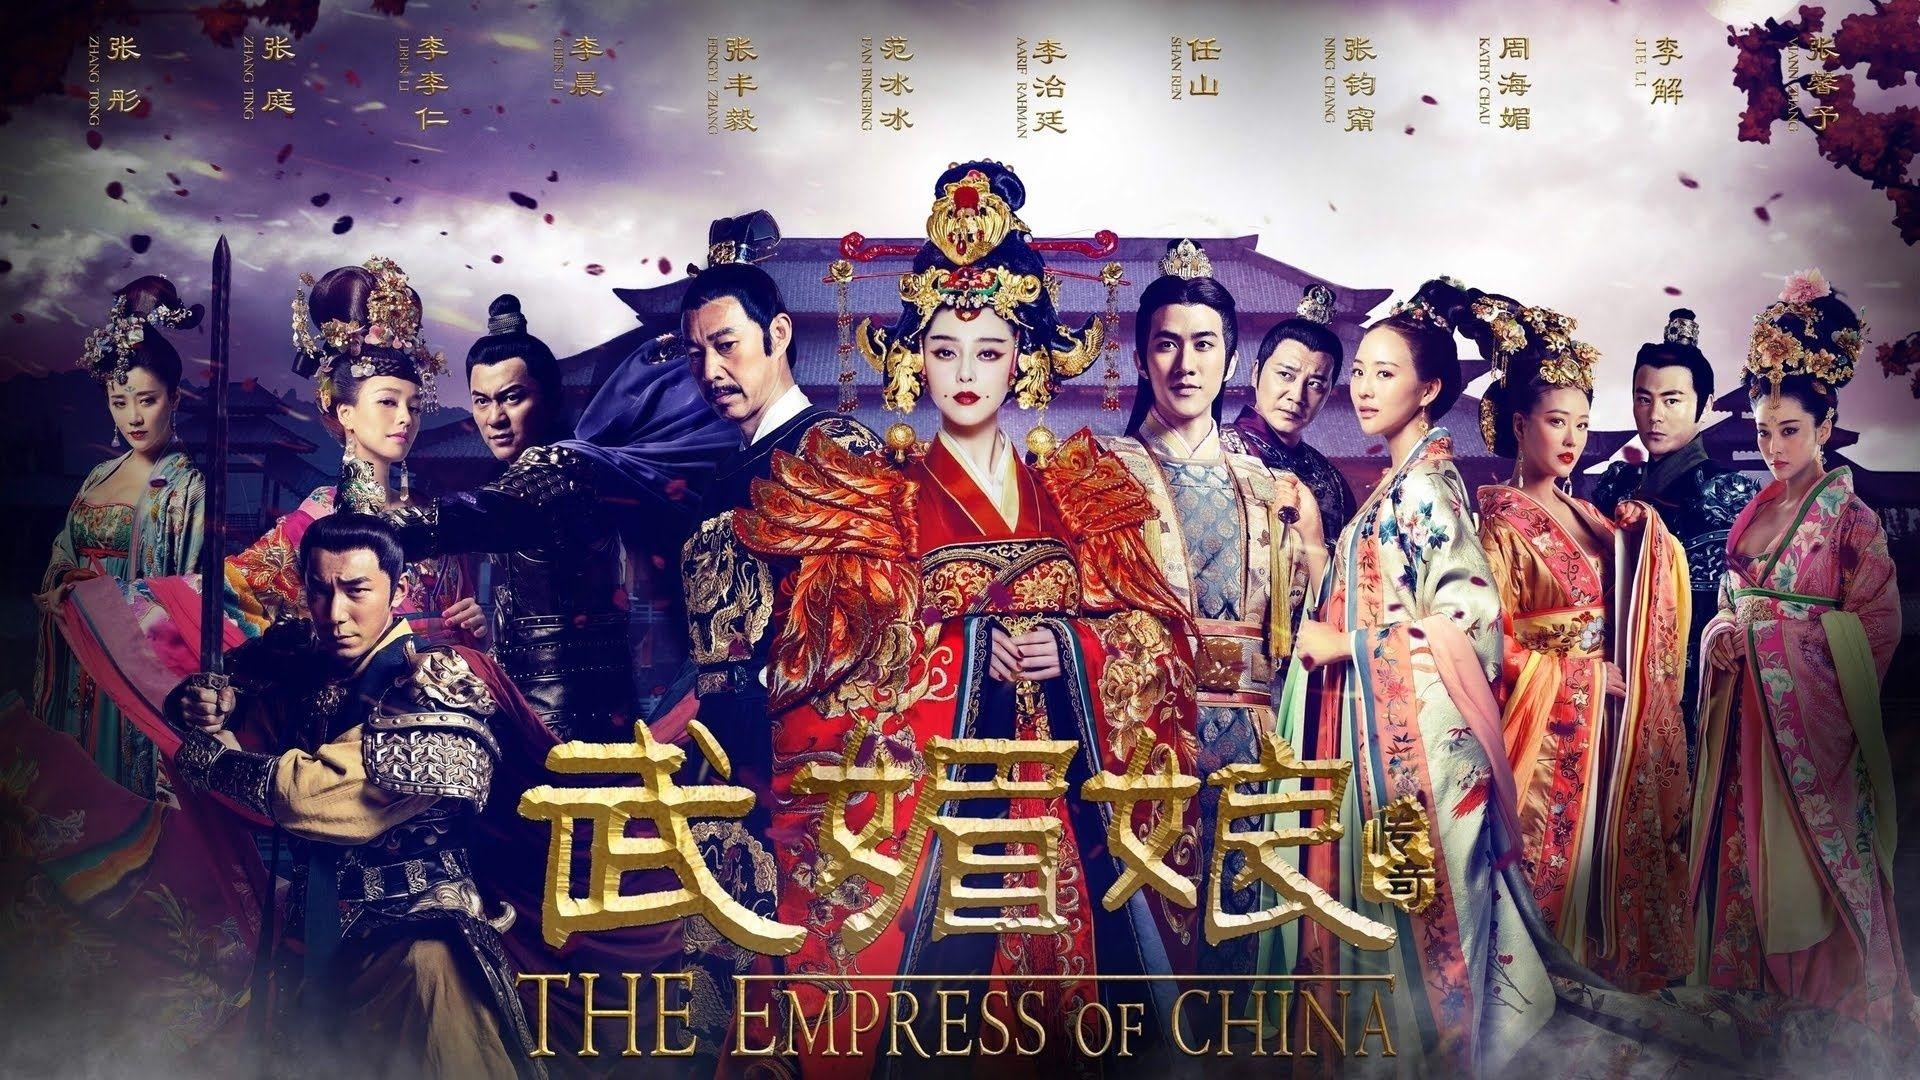 Empress of China Wallpaper Free Empress of China Background